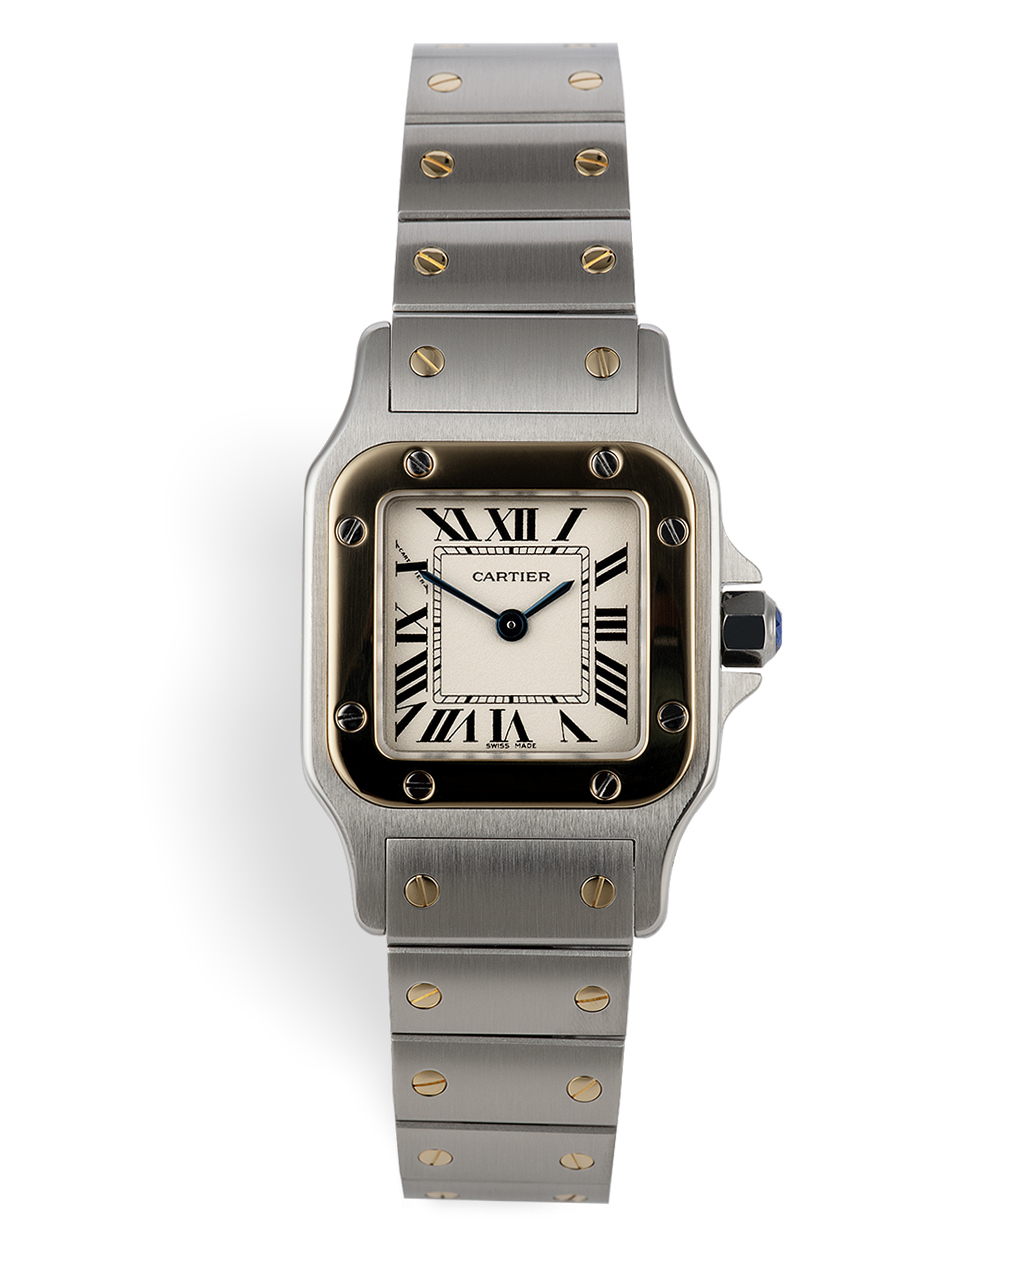 Cartier Santos Galbee Watches | ref 1567 | 18ct Gold & Steel | The ...